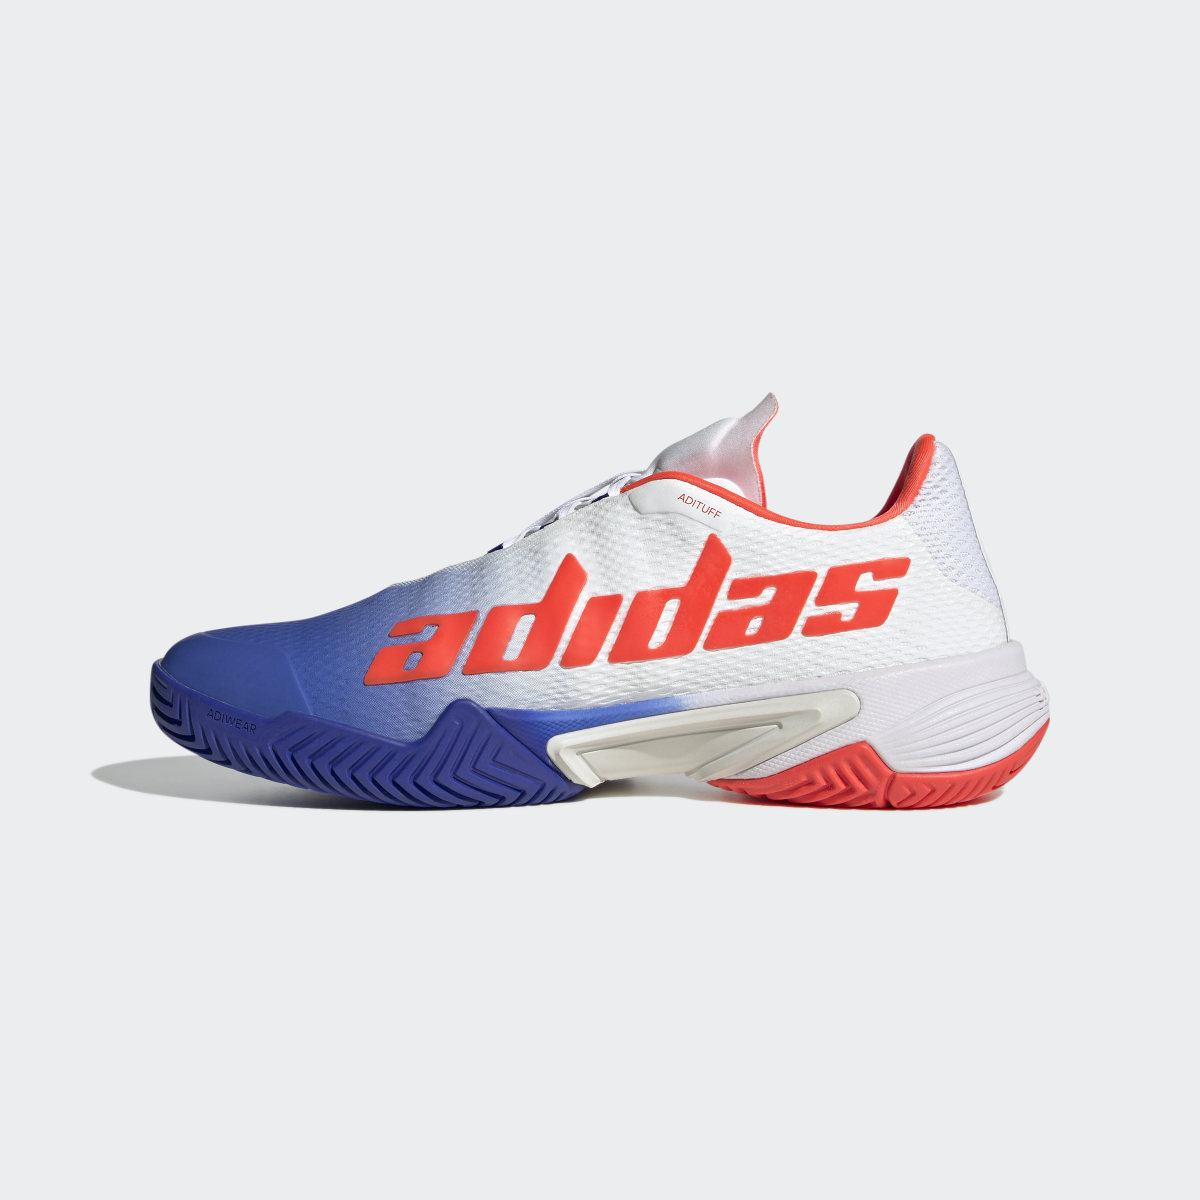 Adidas Barricade Tennis Shoes. 13